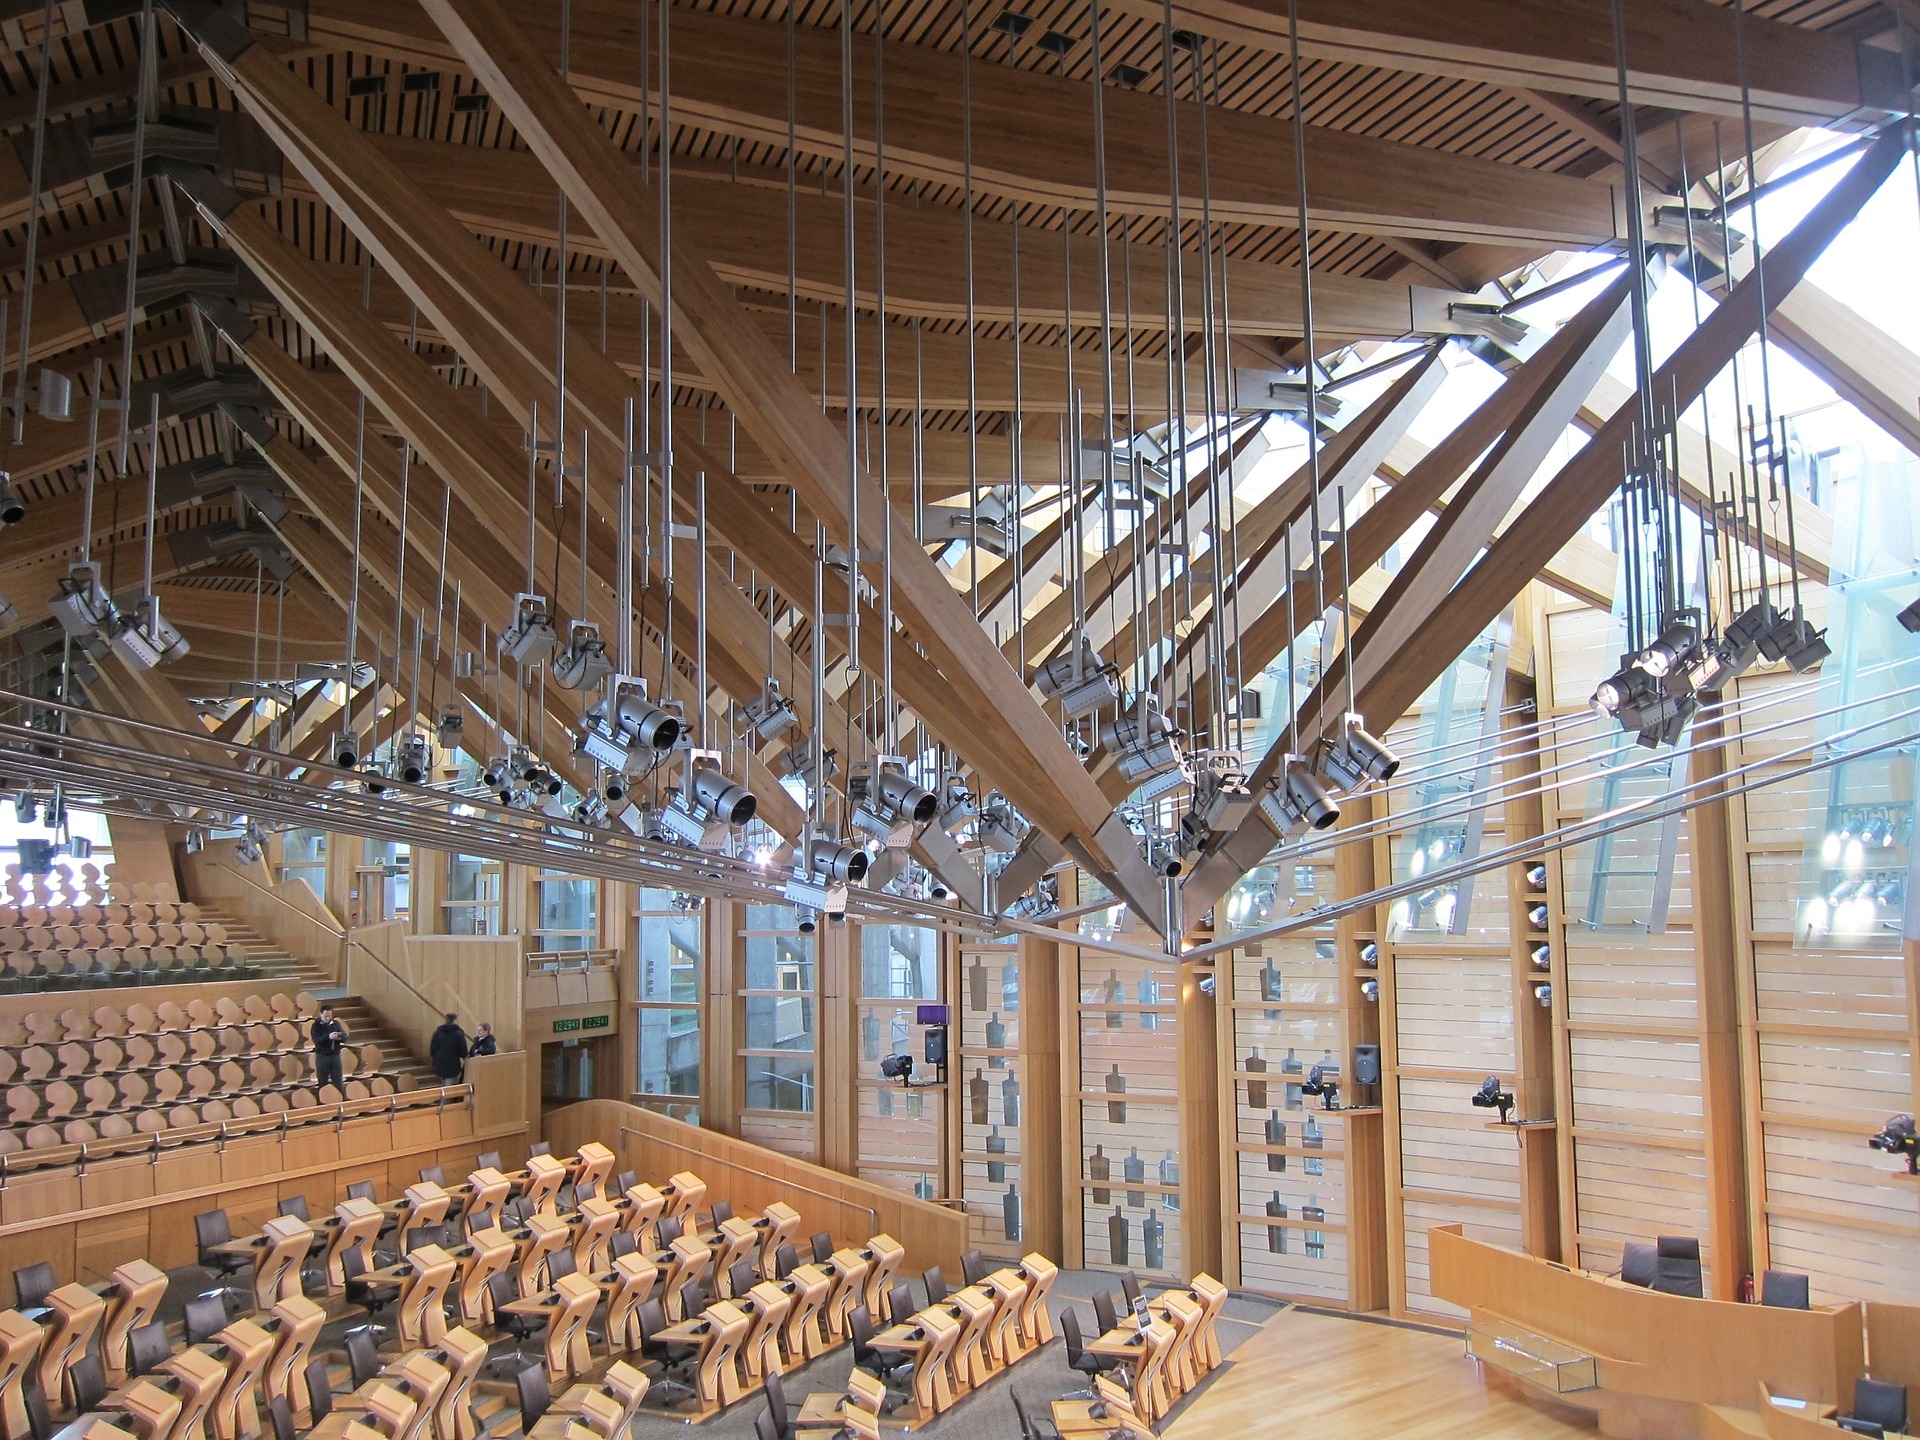 Parliament of Scotland (photo credit: pixabay)